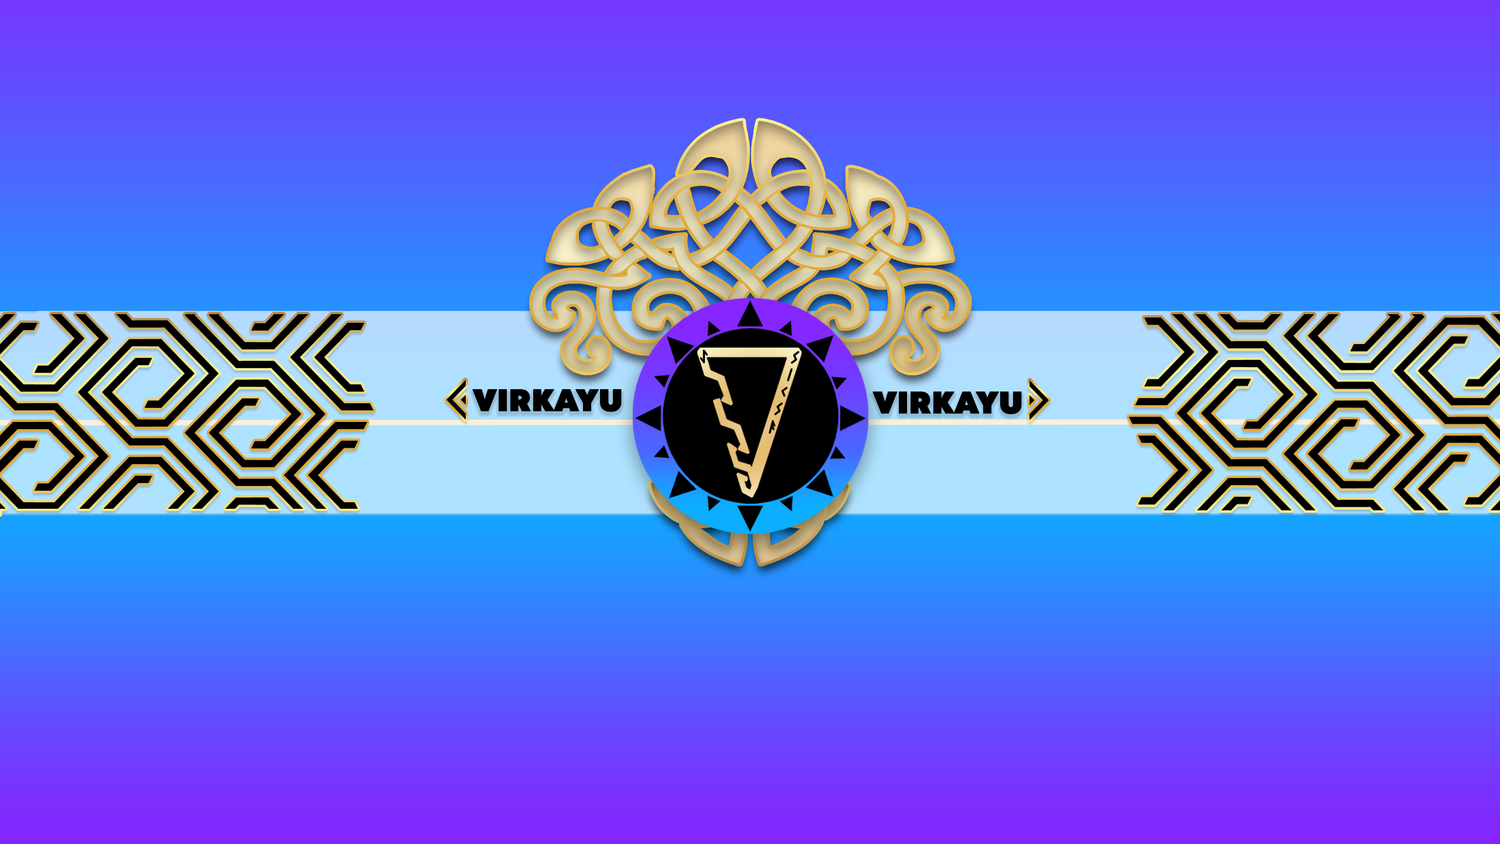 Welcome To Virkayu's Jungle Coaching Site!